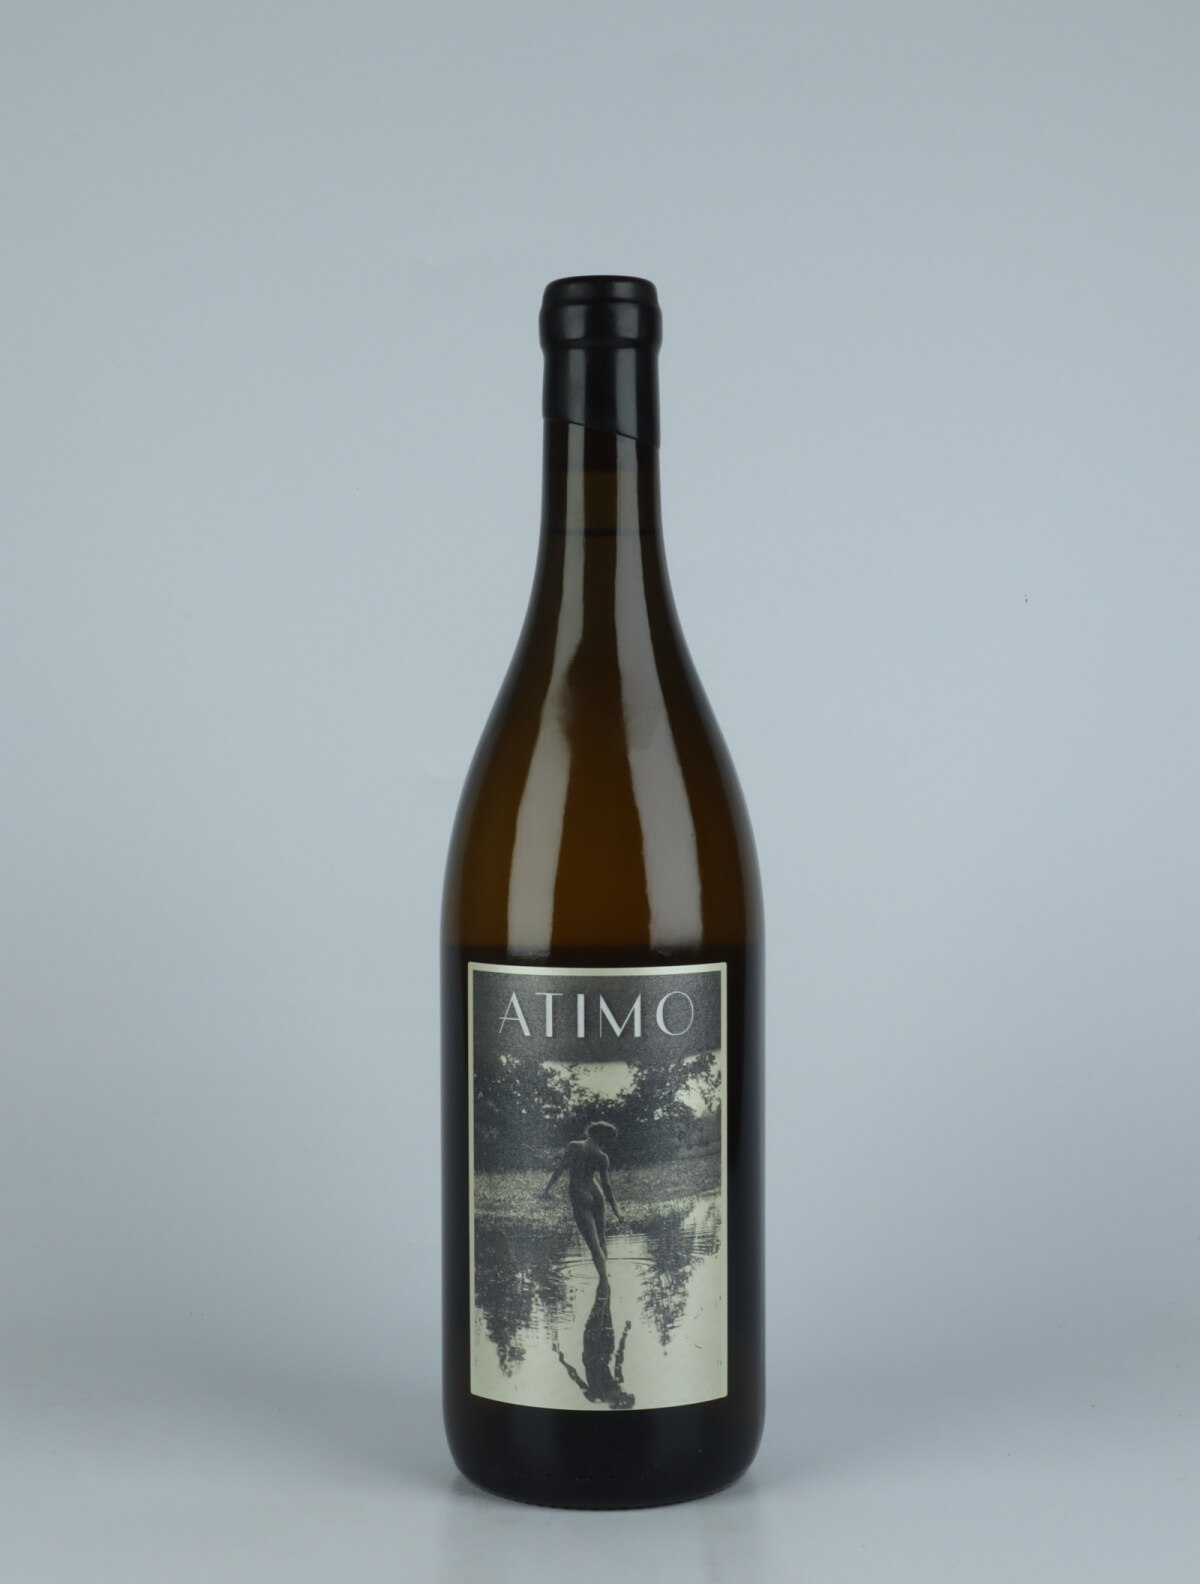 A bottle 2021 Malvazija Orange wine from Atimo, Istria in Croatia